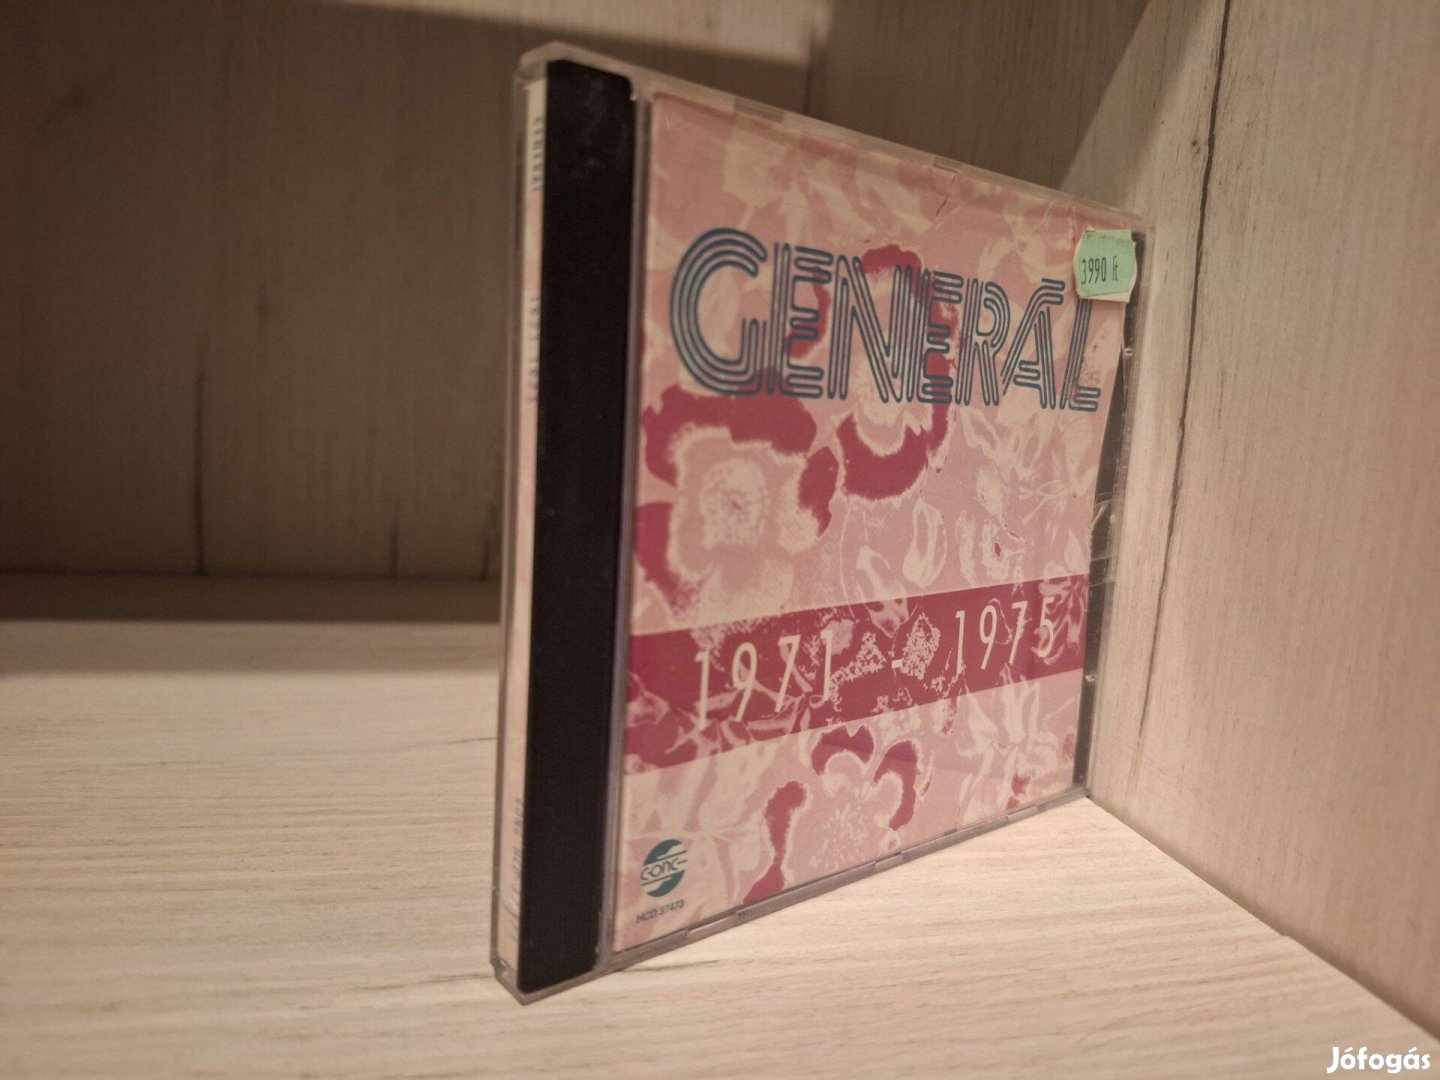 Generál - 1971 - 1975 CD ( 1971-1975 )